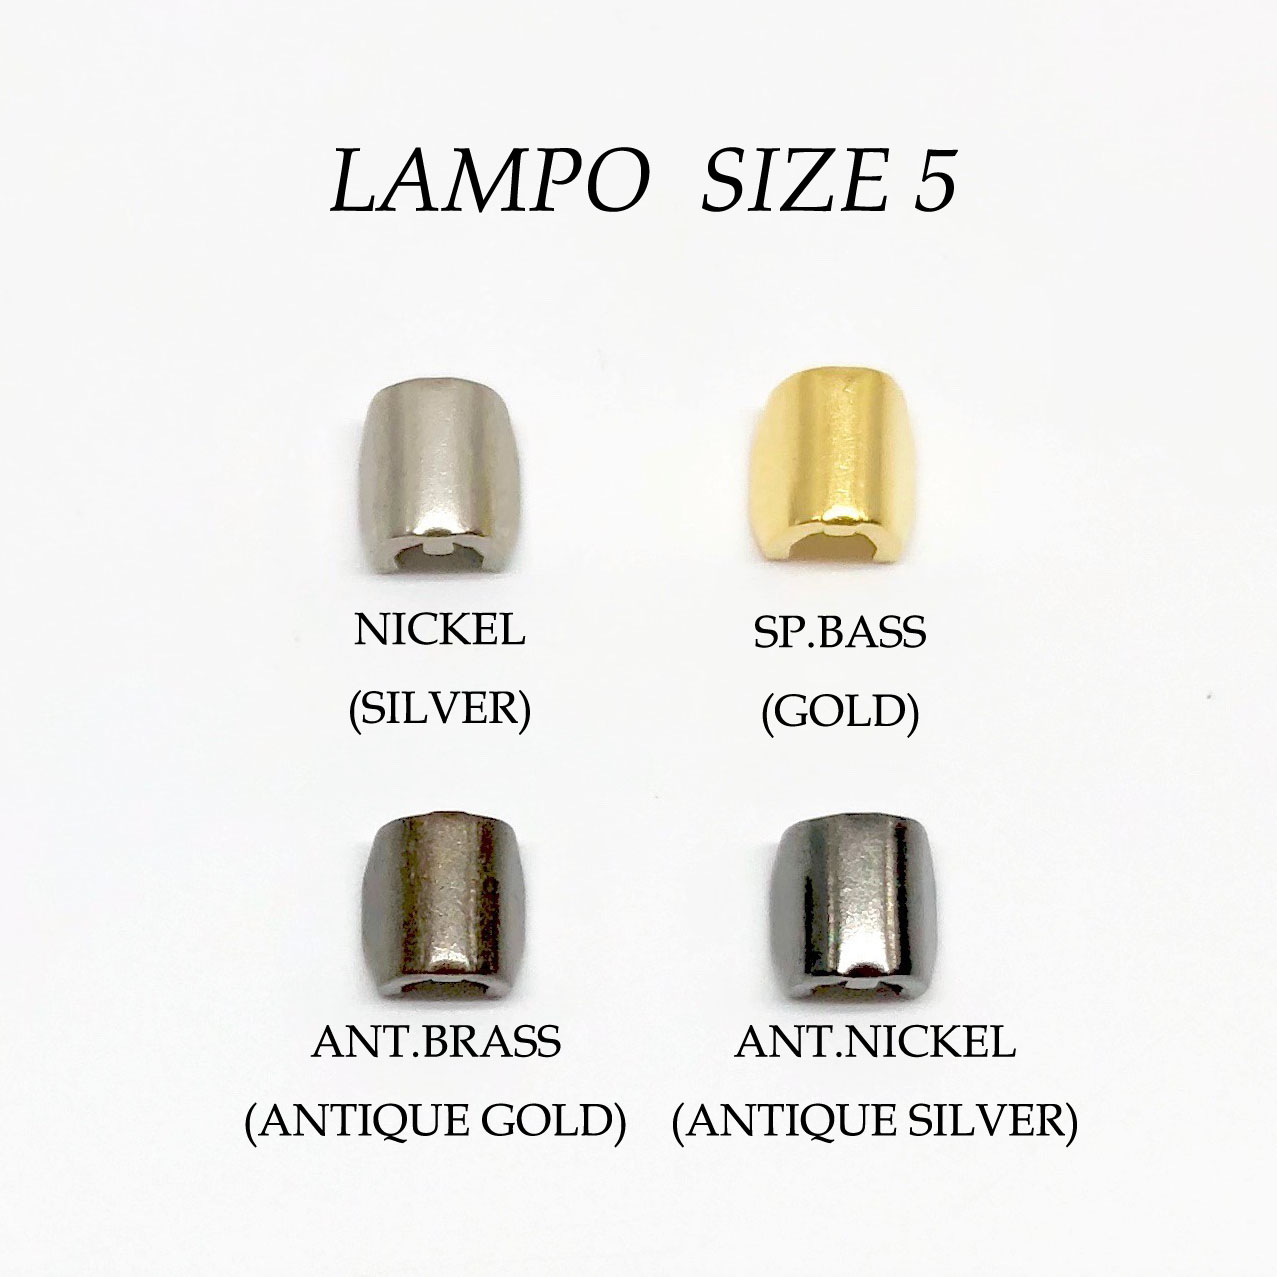 083S 仅适用于 Super LAMPO拉链上止尺寸5 LAMPO(GIOVANNI LANFRANCHI SPA)